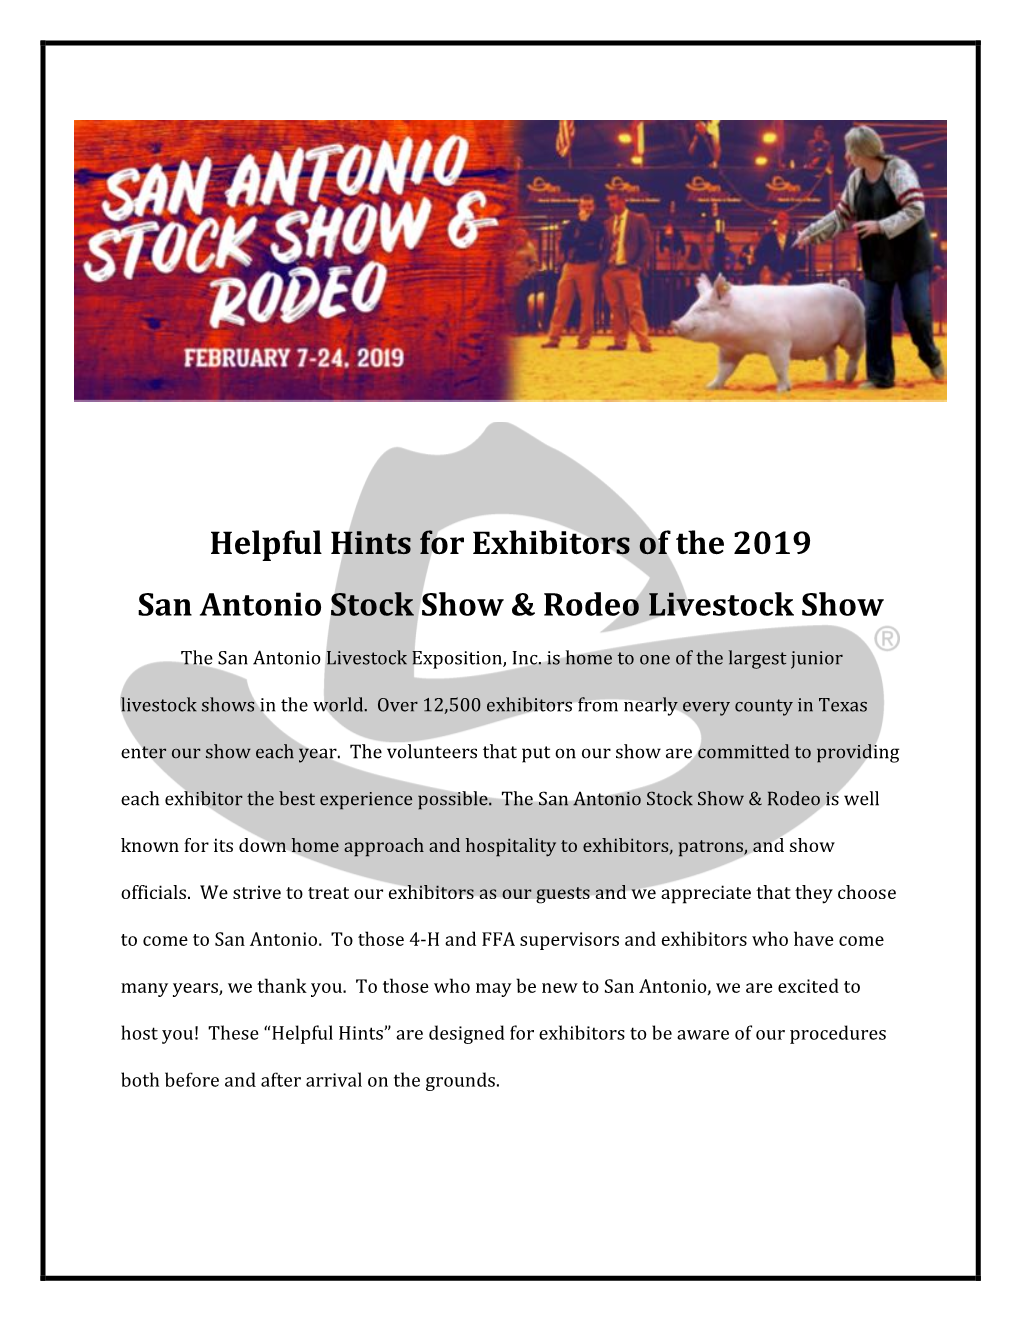 Helpful Hints for Exhibitors of the 2019 San Antonio Stock Show & Rodeo Livestock Show